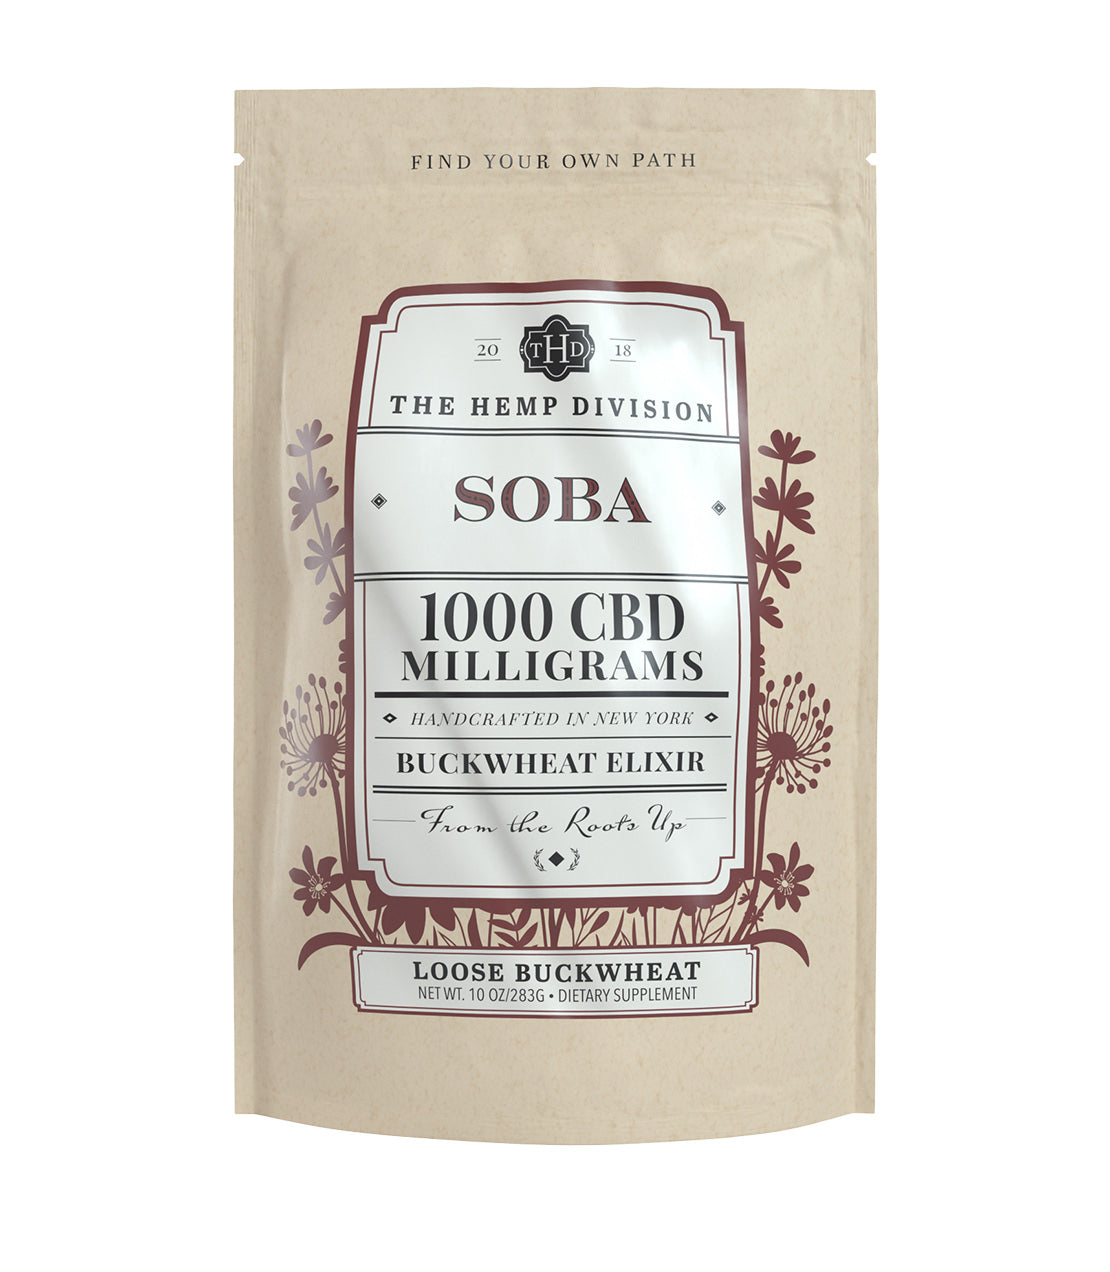 Soba 1000 CBD MG Buckwheat Elixir - 10 oz. Bag - Loose 10 oz. Bag - Harney & Sons Fine Teas